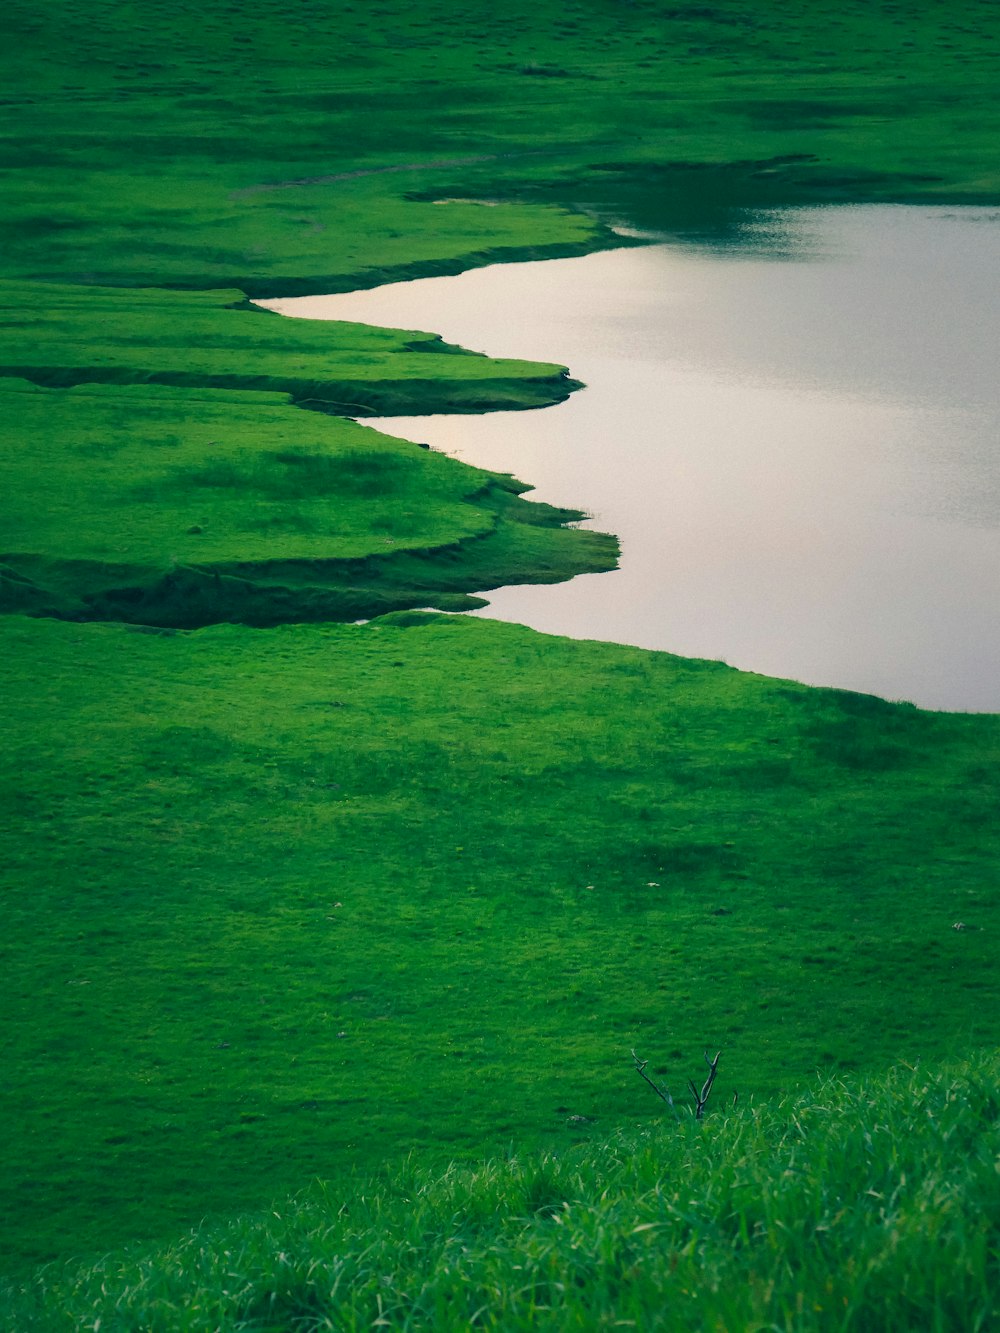 green grass field near lake during daytime